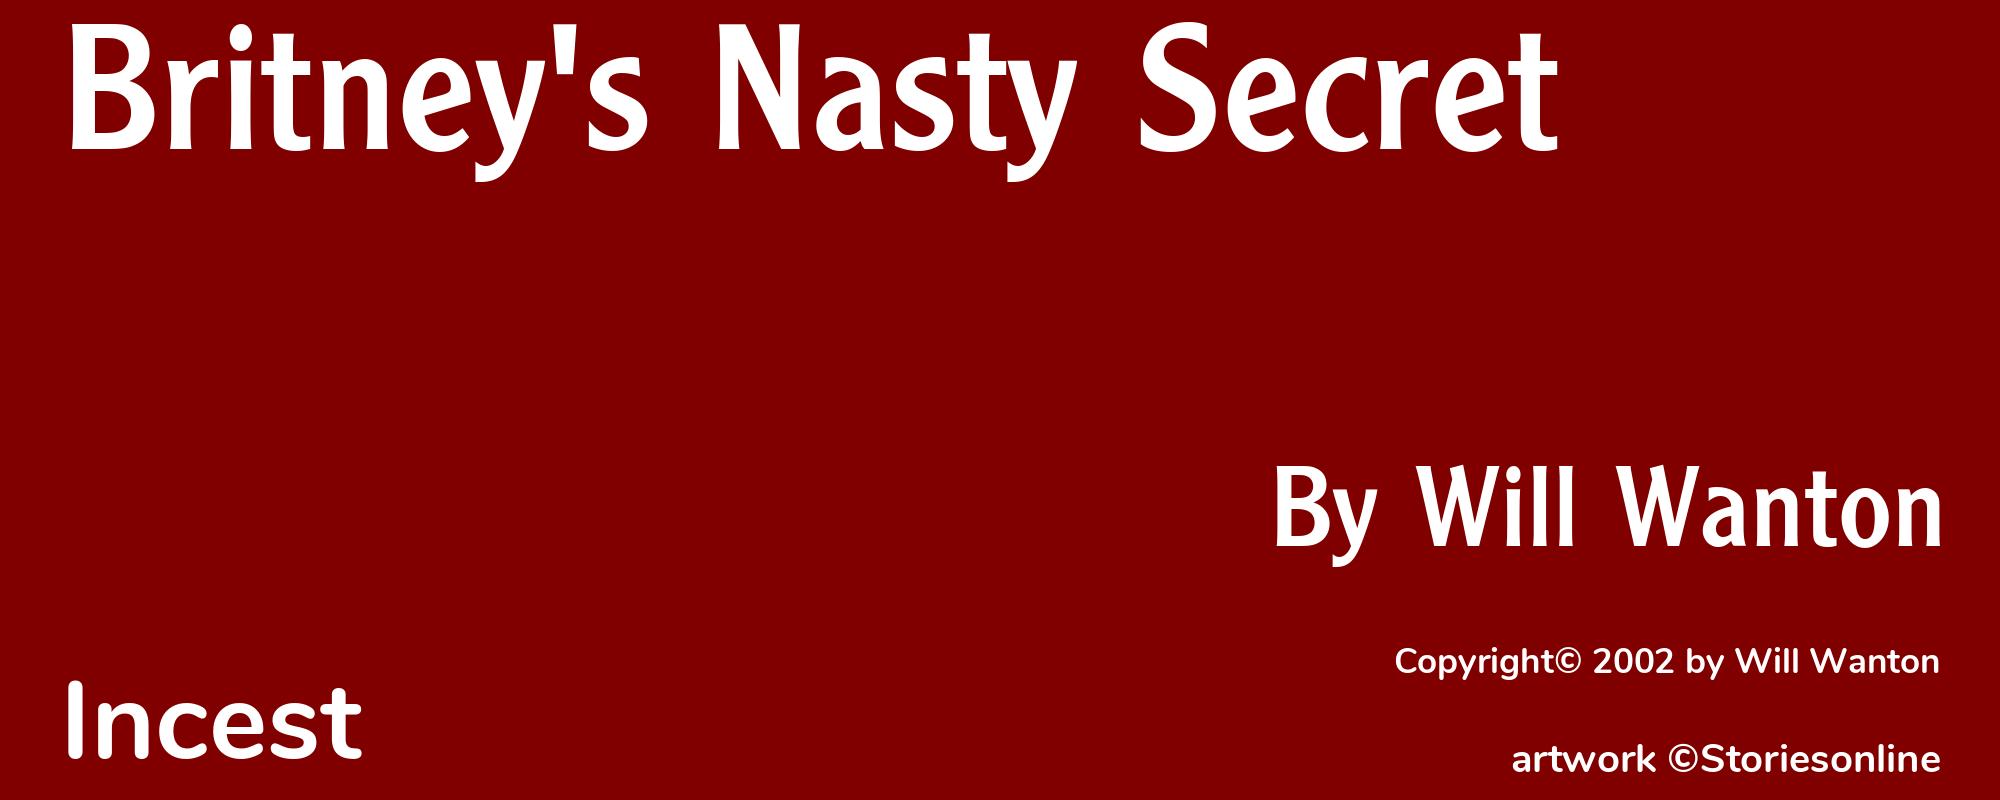 Britney's Nasty Secret - Cover